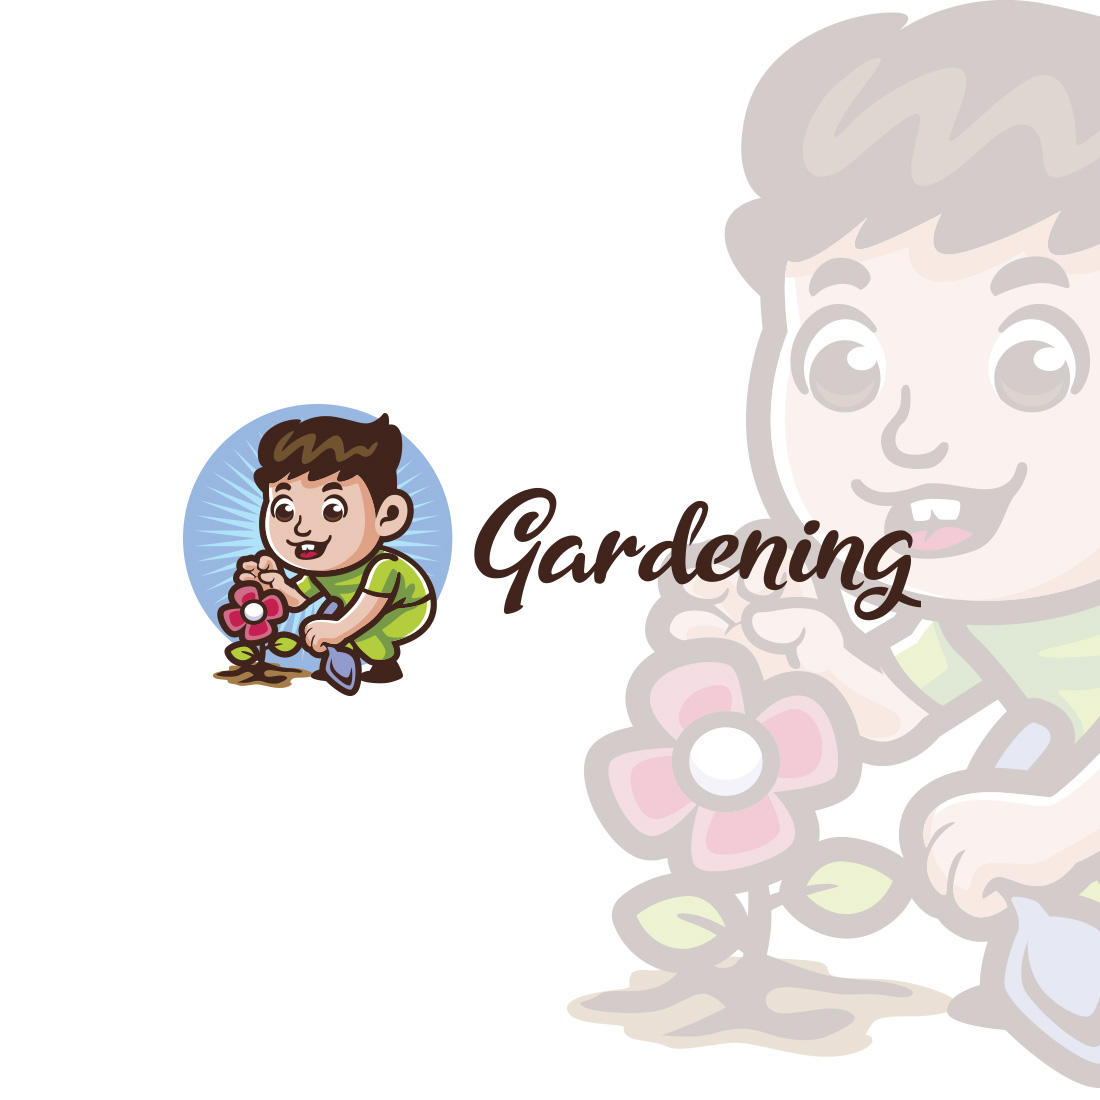 Gardening Boy Character Mascot Logo cover image.